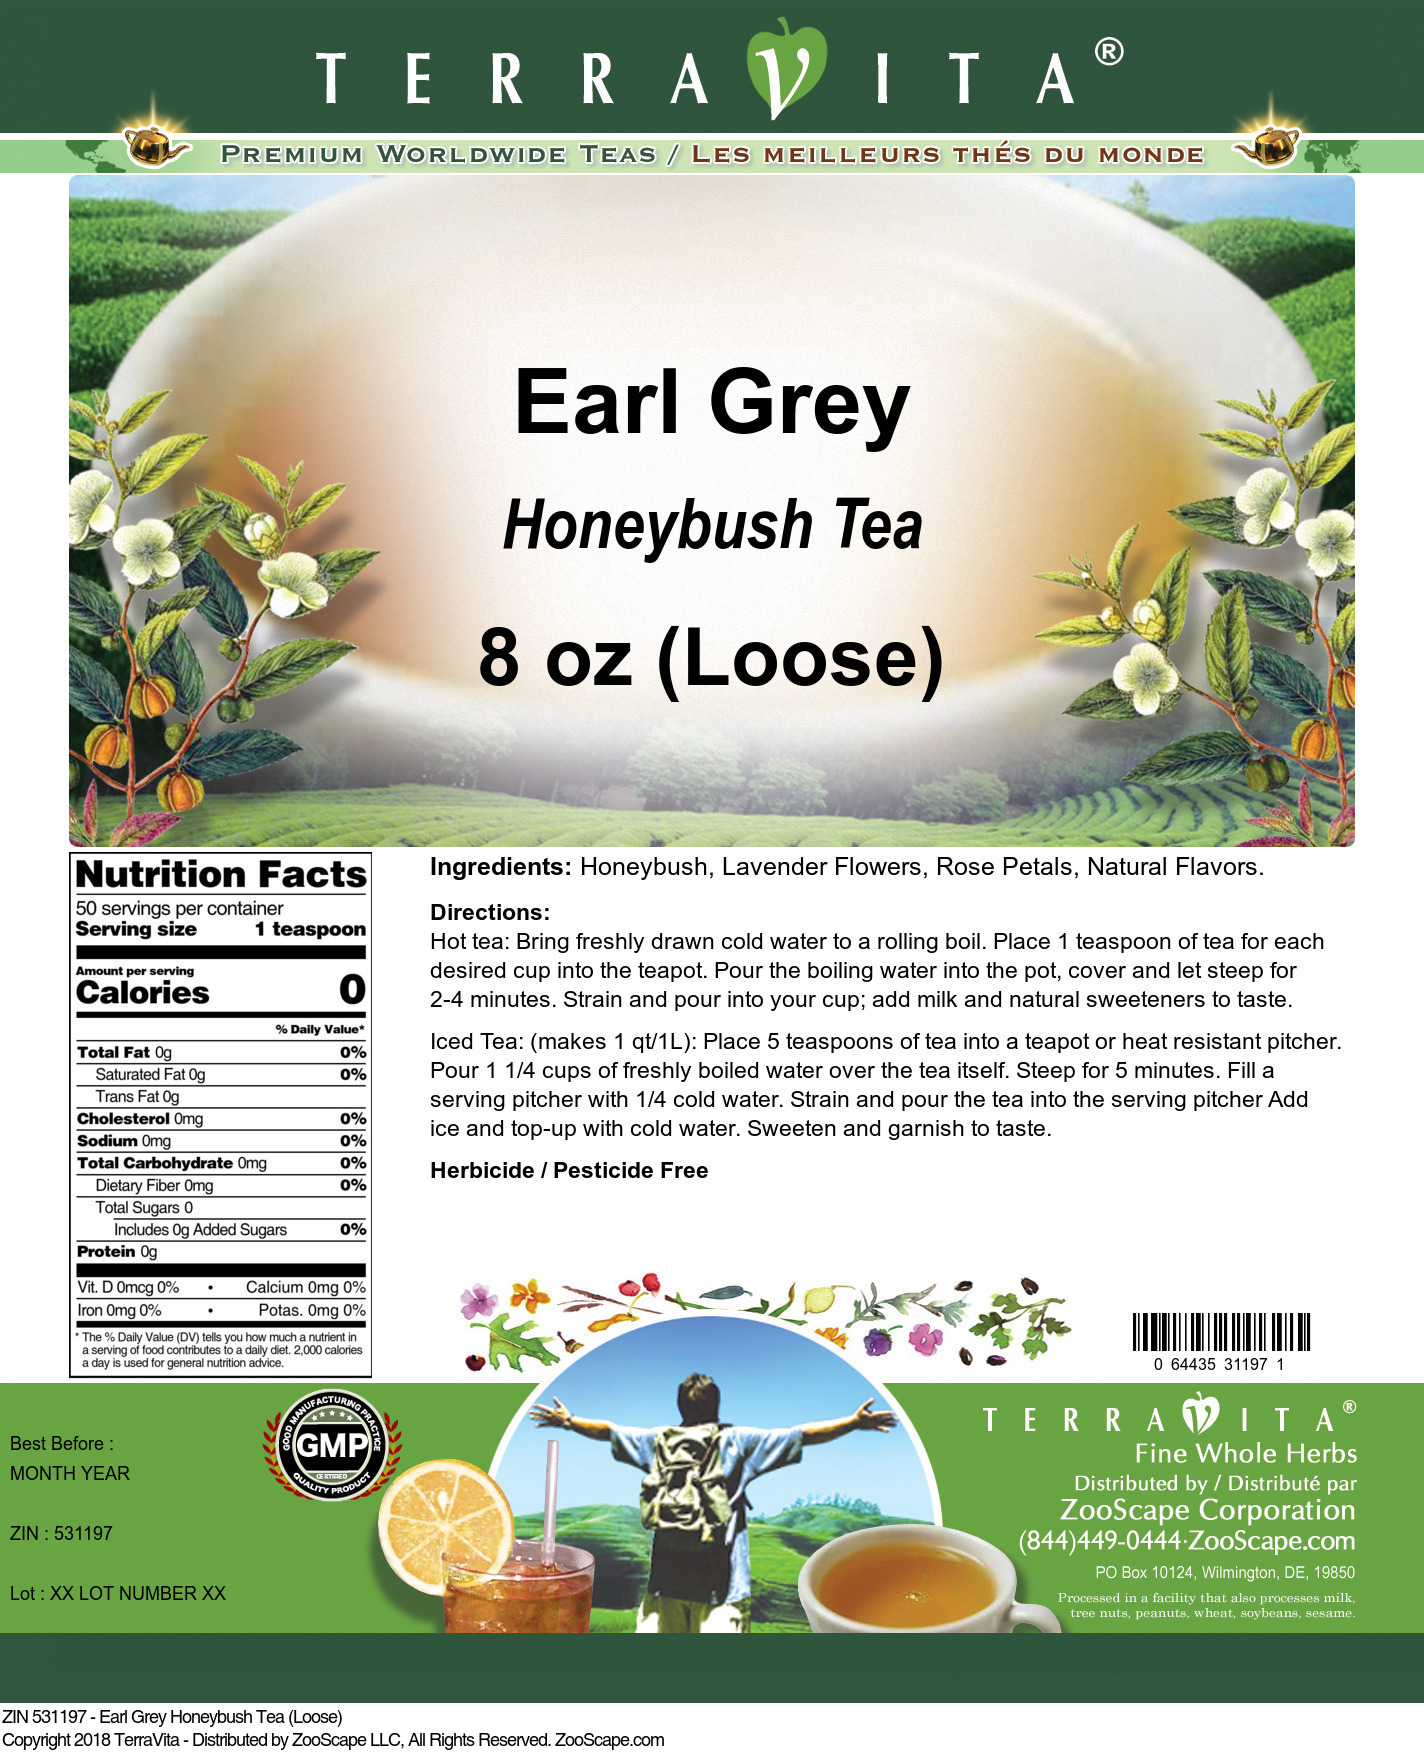 Earl Grey Honeybush Tea (Loose) - Label